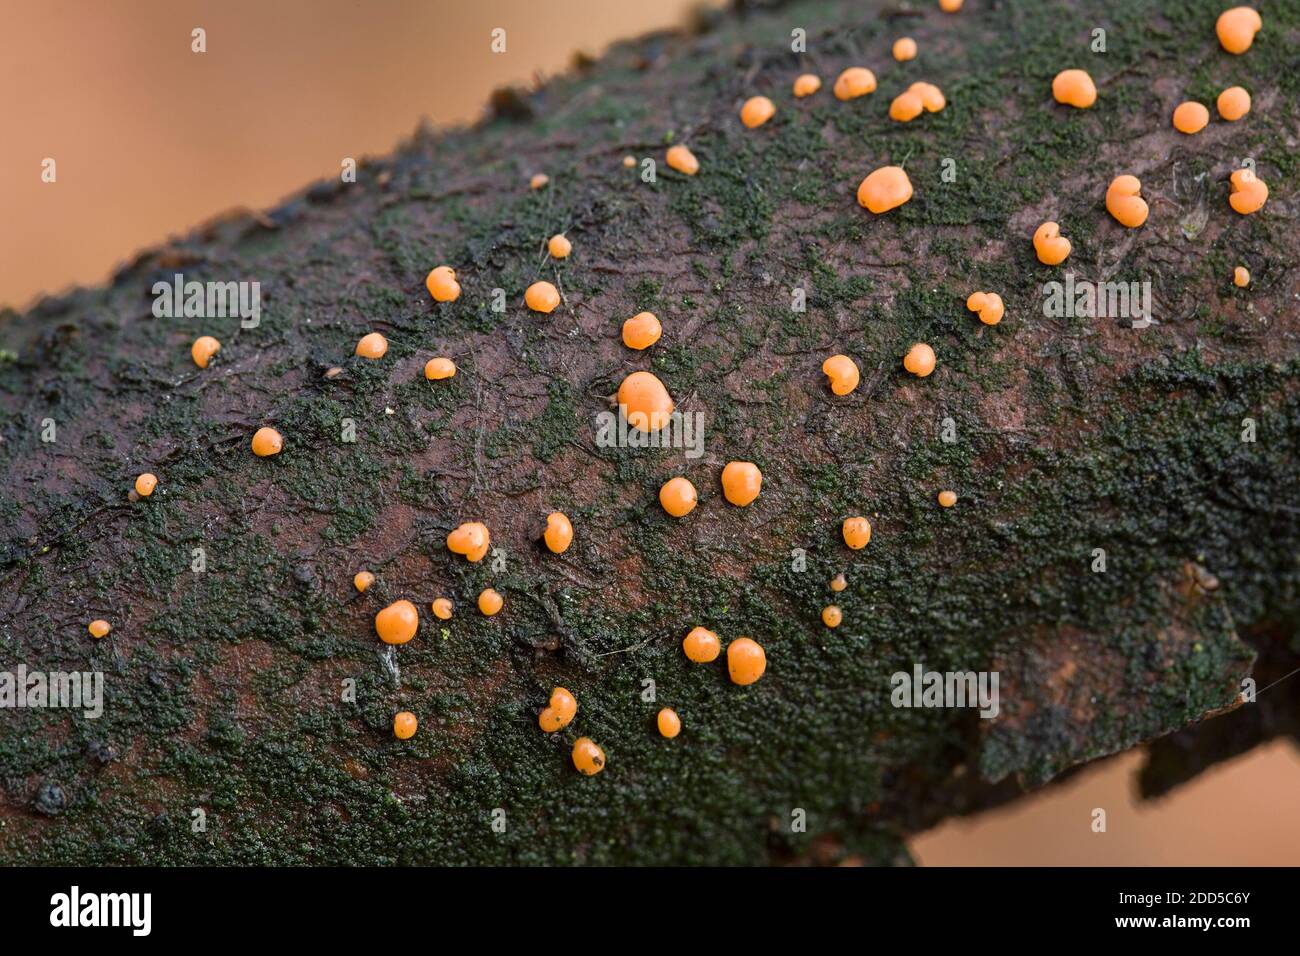 Fungus Coral spot (Nectria cinnabarina) on dead branch Stock Photo